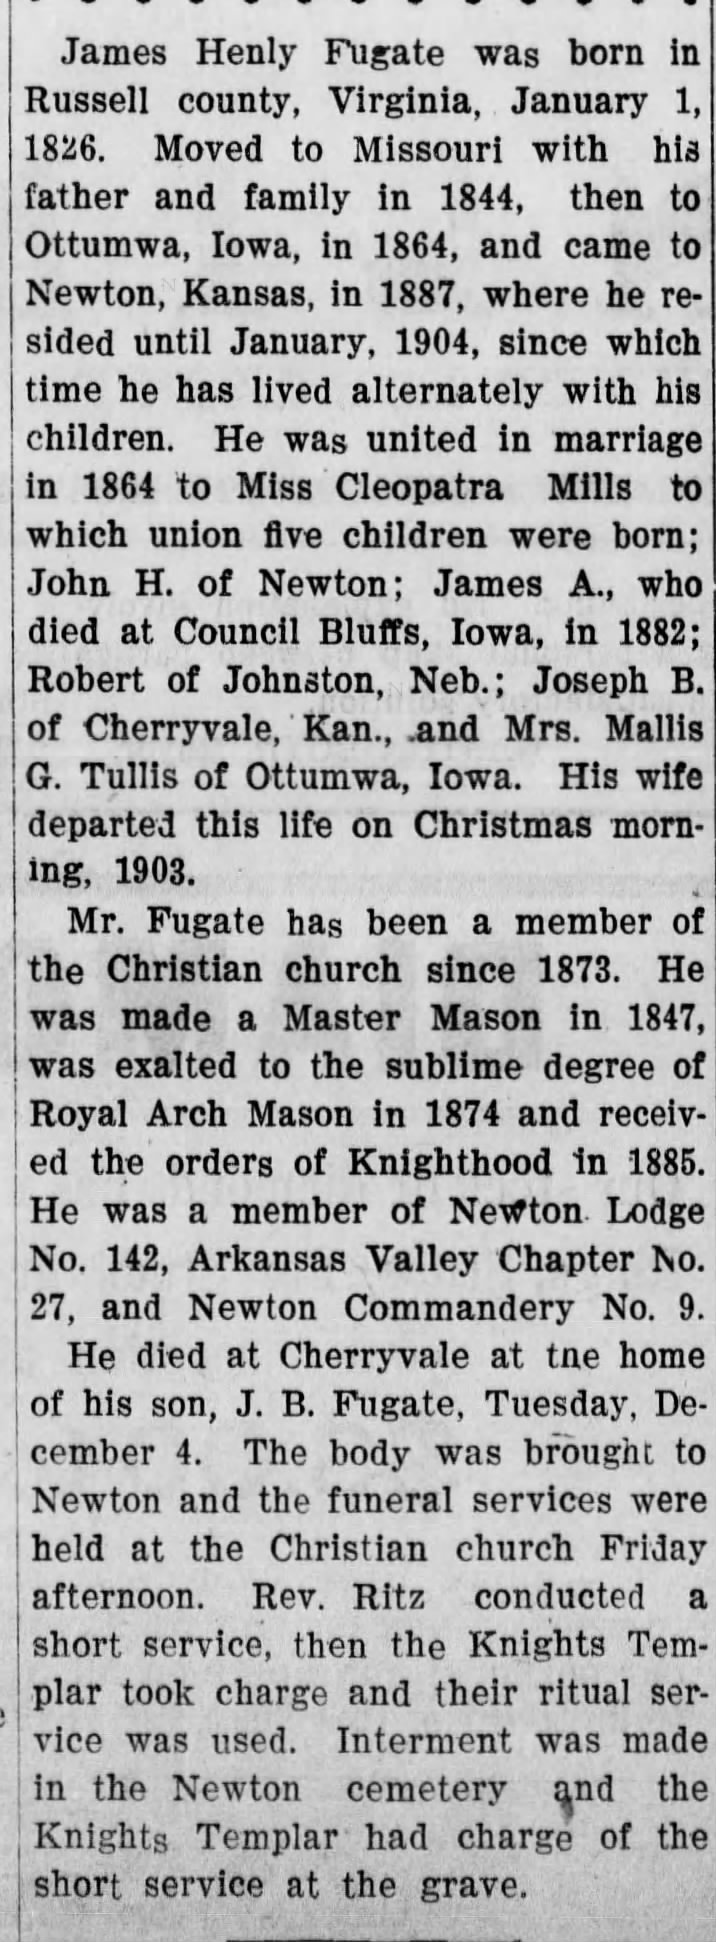 James Henly Fugate Obituary, 1906, Kansas